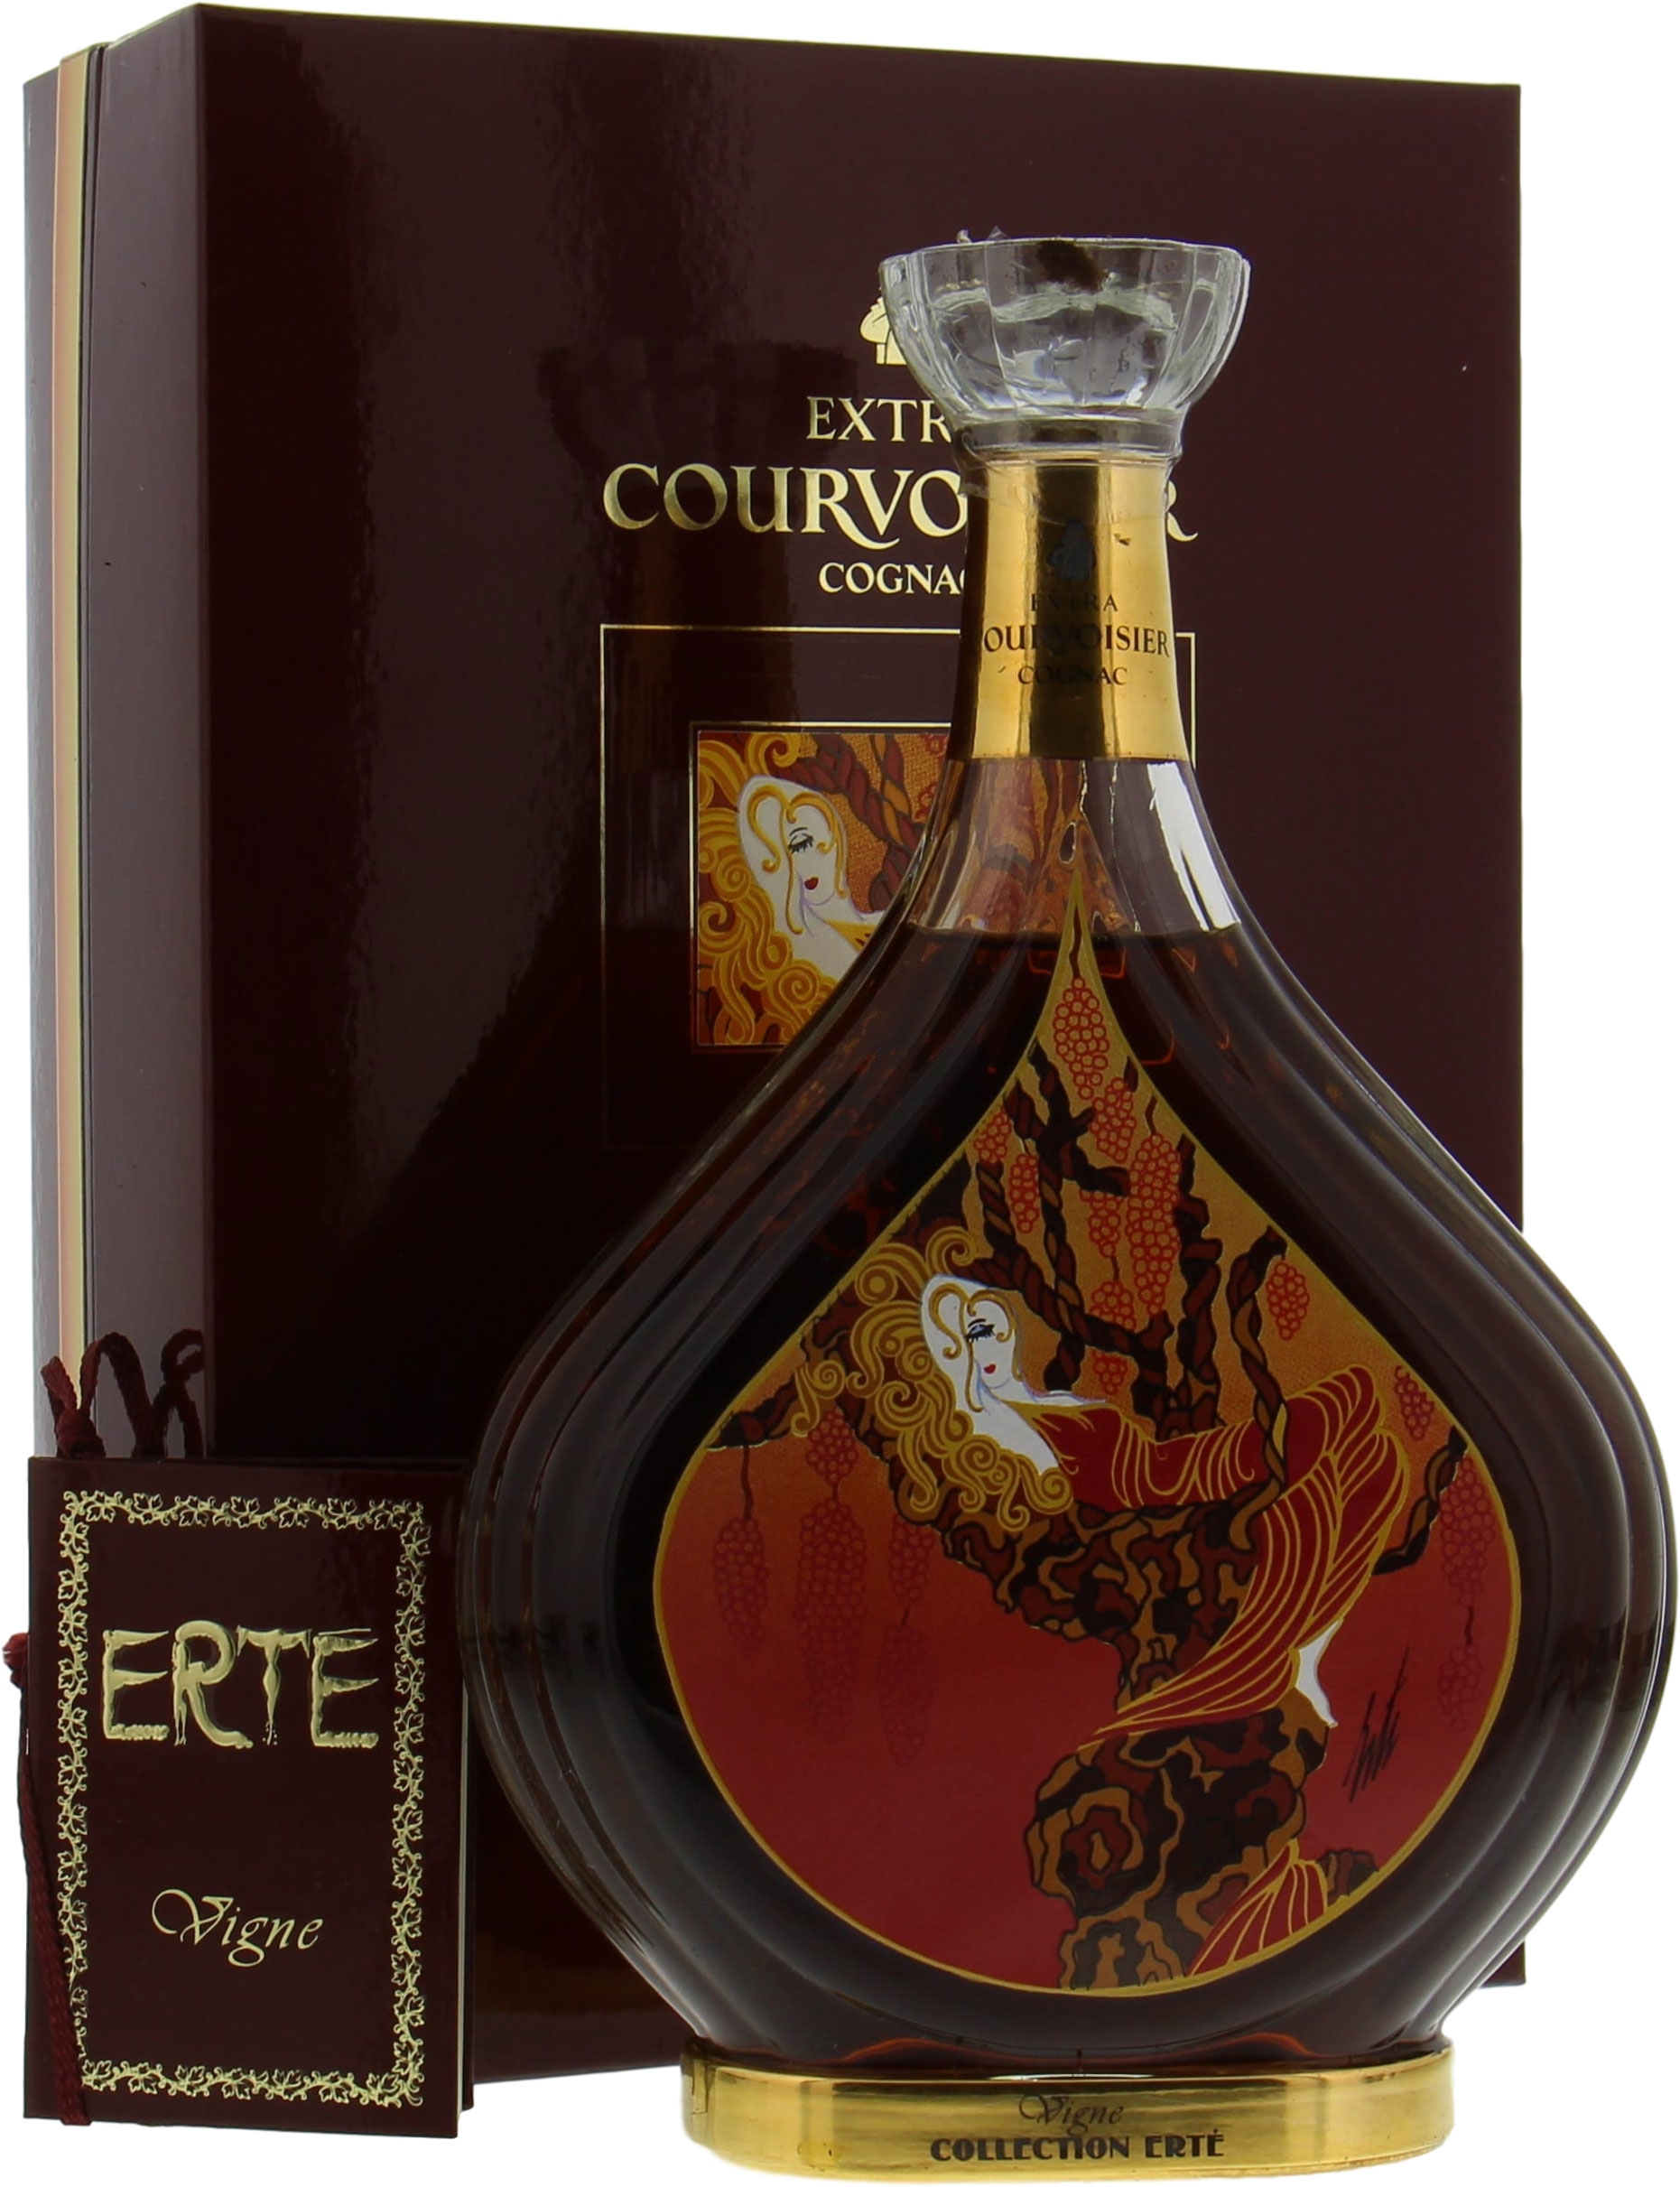 Courvoisier Cognac - Erte no 1 NV From Original Wooden Case